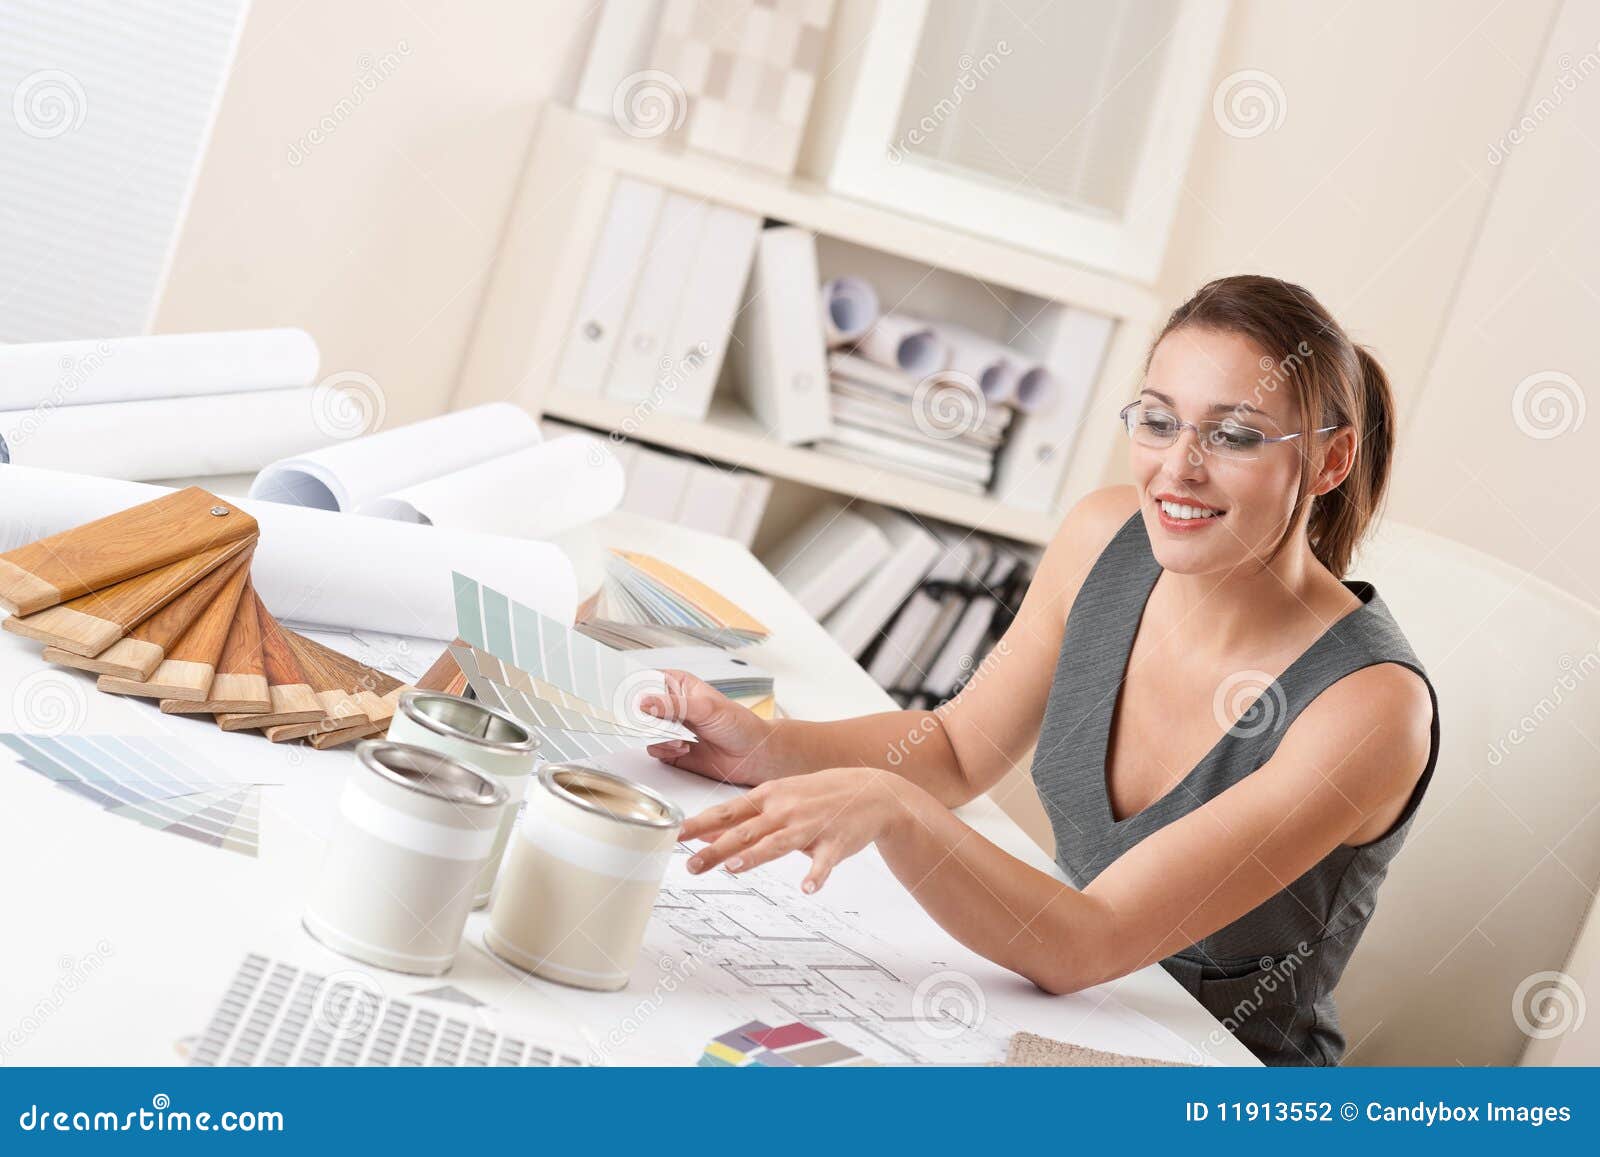 Successful Interior Designer Woman At Office Stock Photo